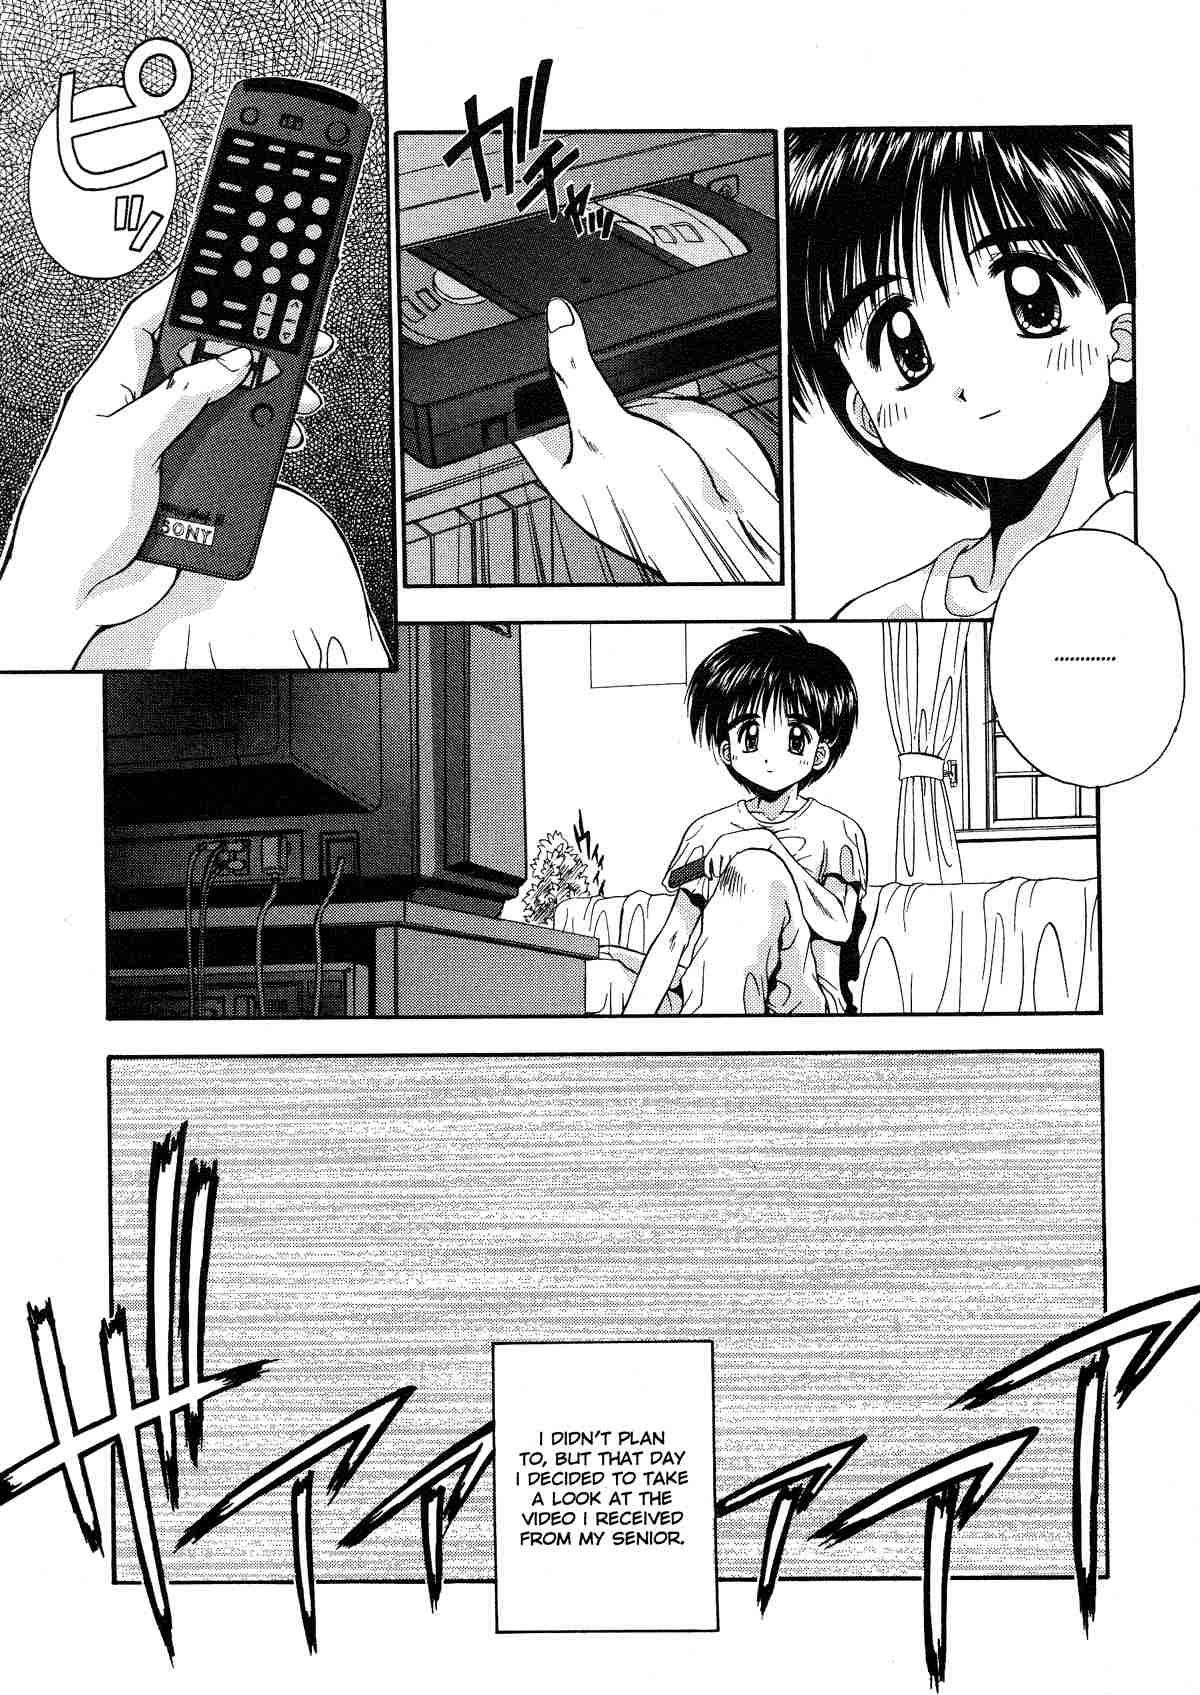 Innocence 28 hentai manga